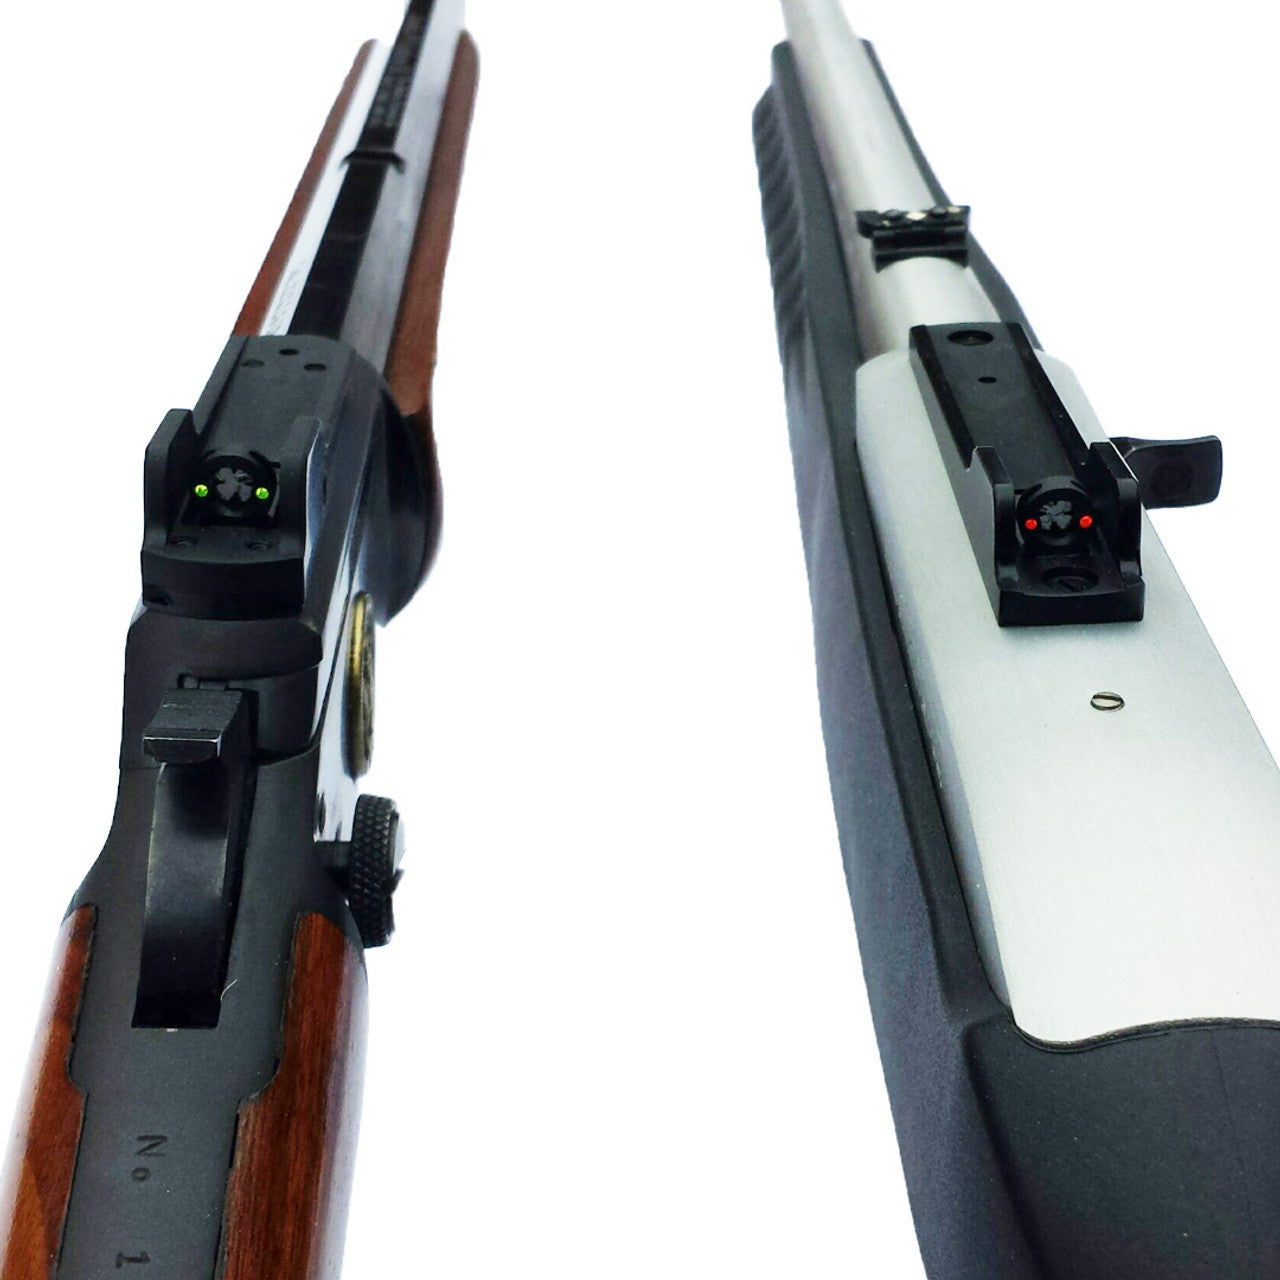 Marlin & Henry Lever Rifle Peep Sights | Cloverleaf + Green Fiber Optic